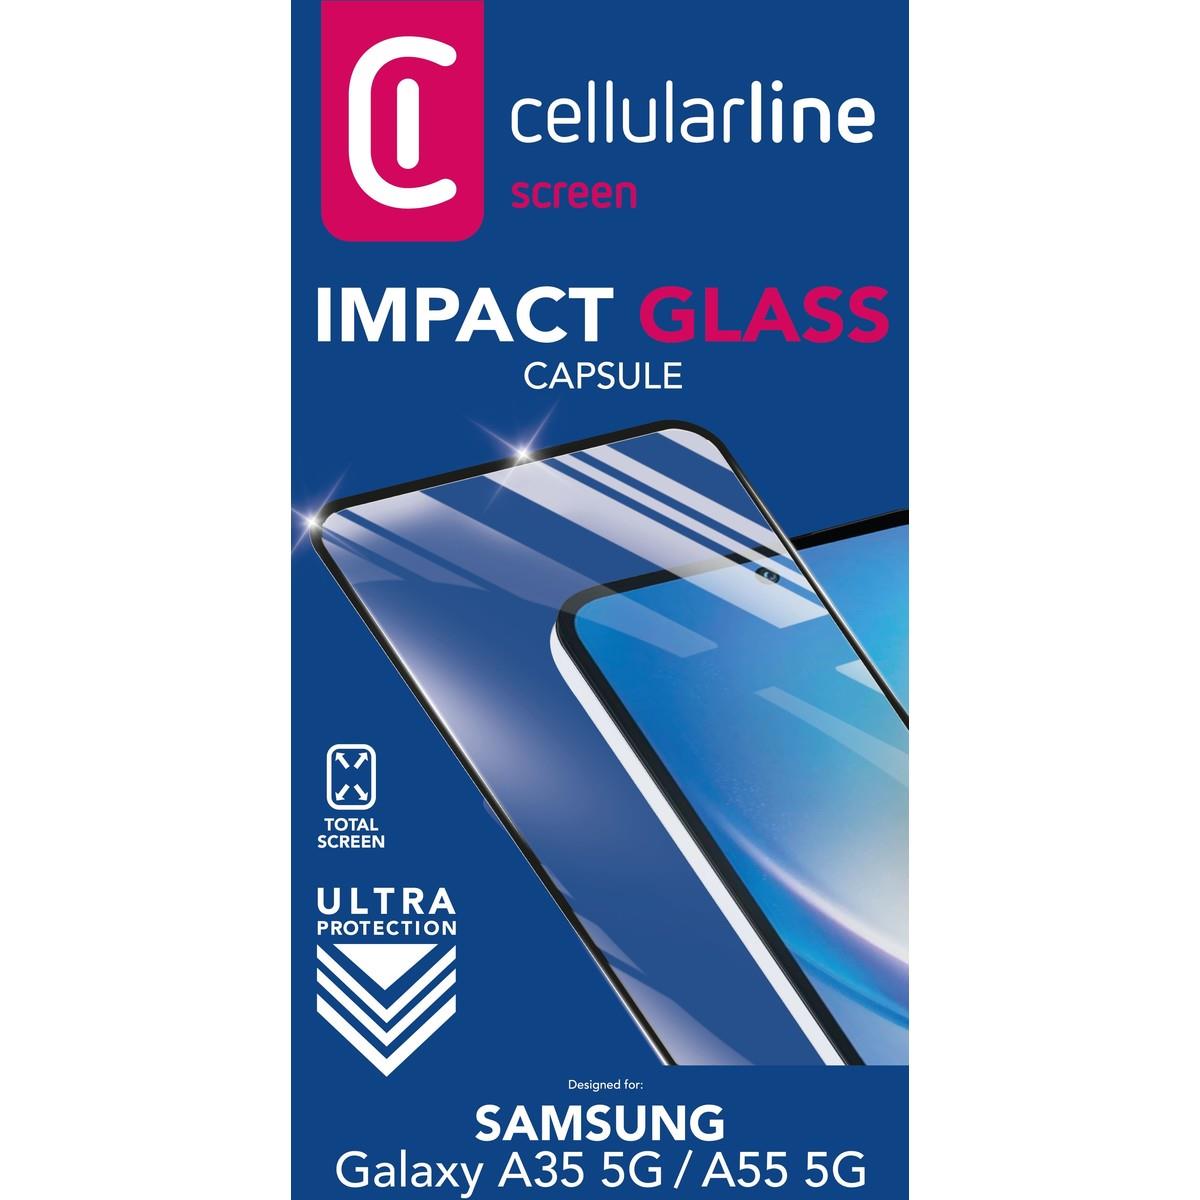 Schutzglas IMPACT GLASS CAPSULE für Samsung Galaxy A35 5G / A55 5G